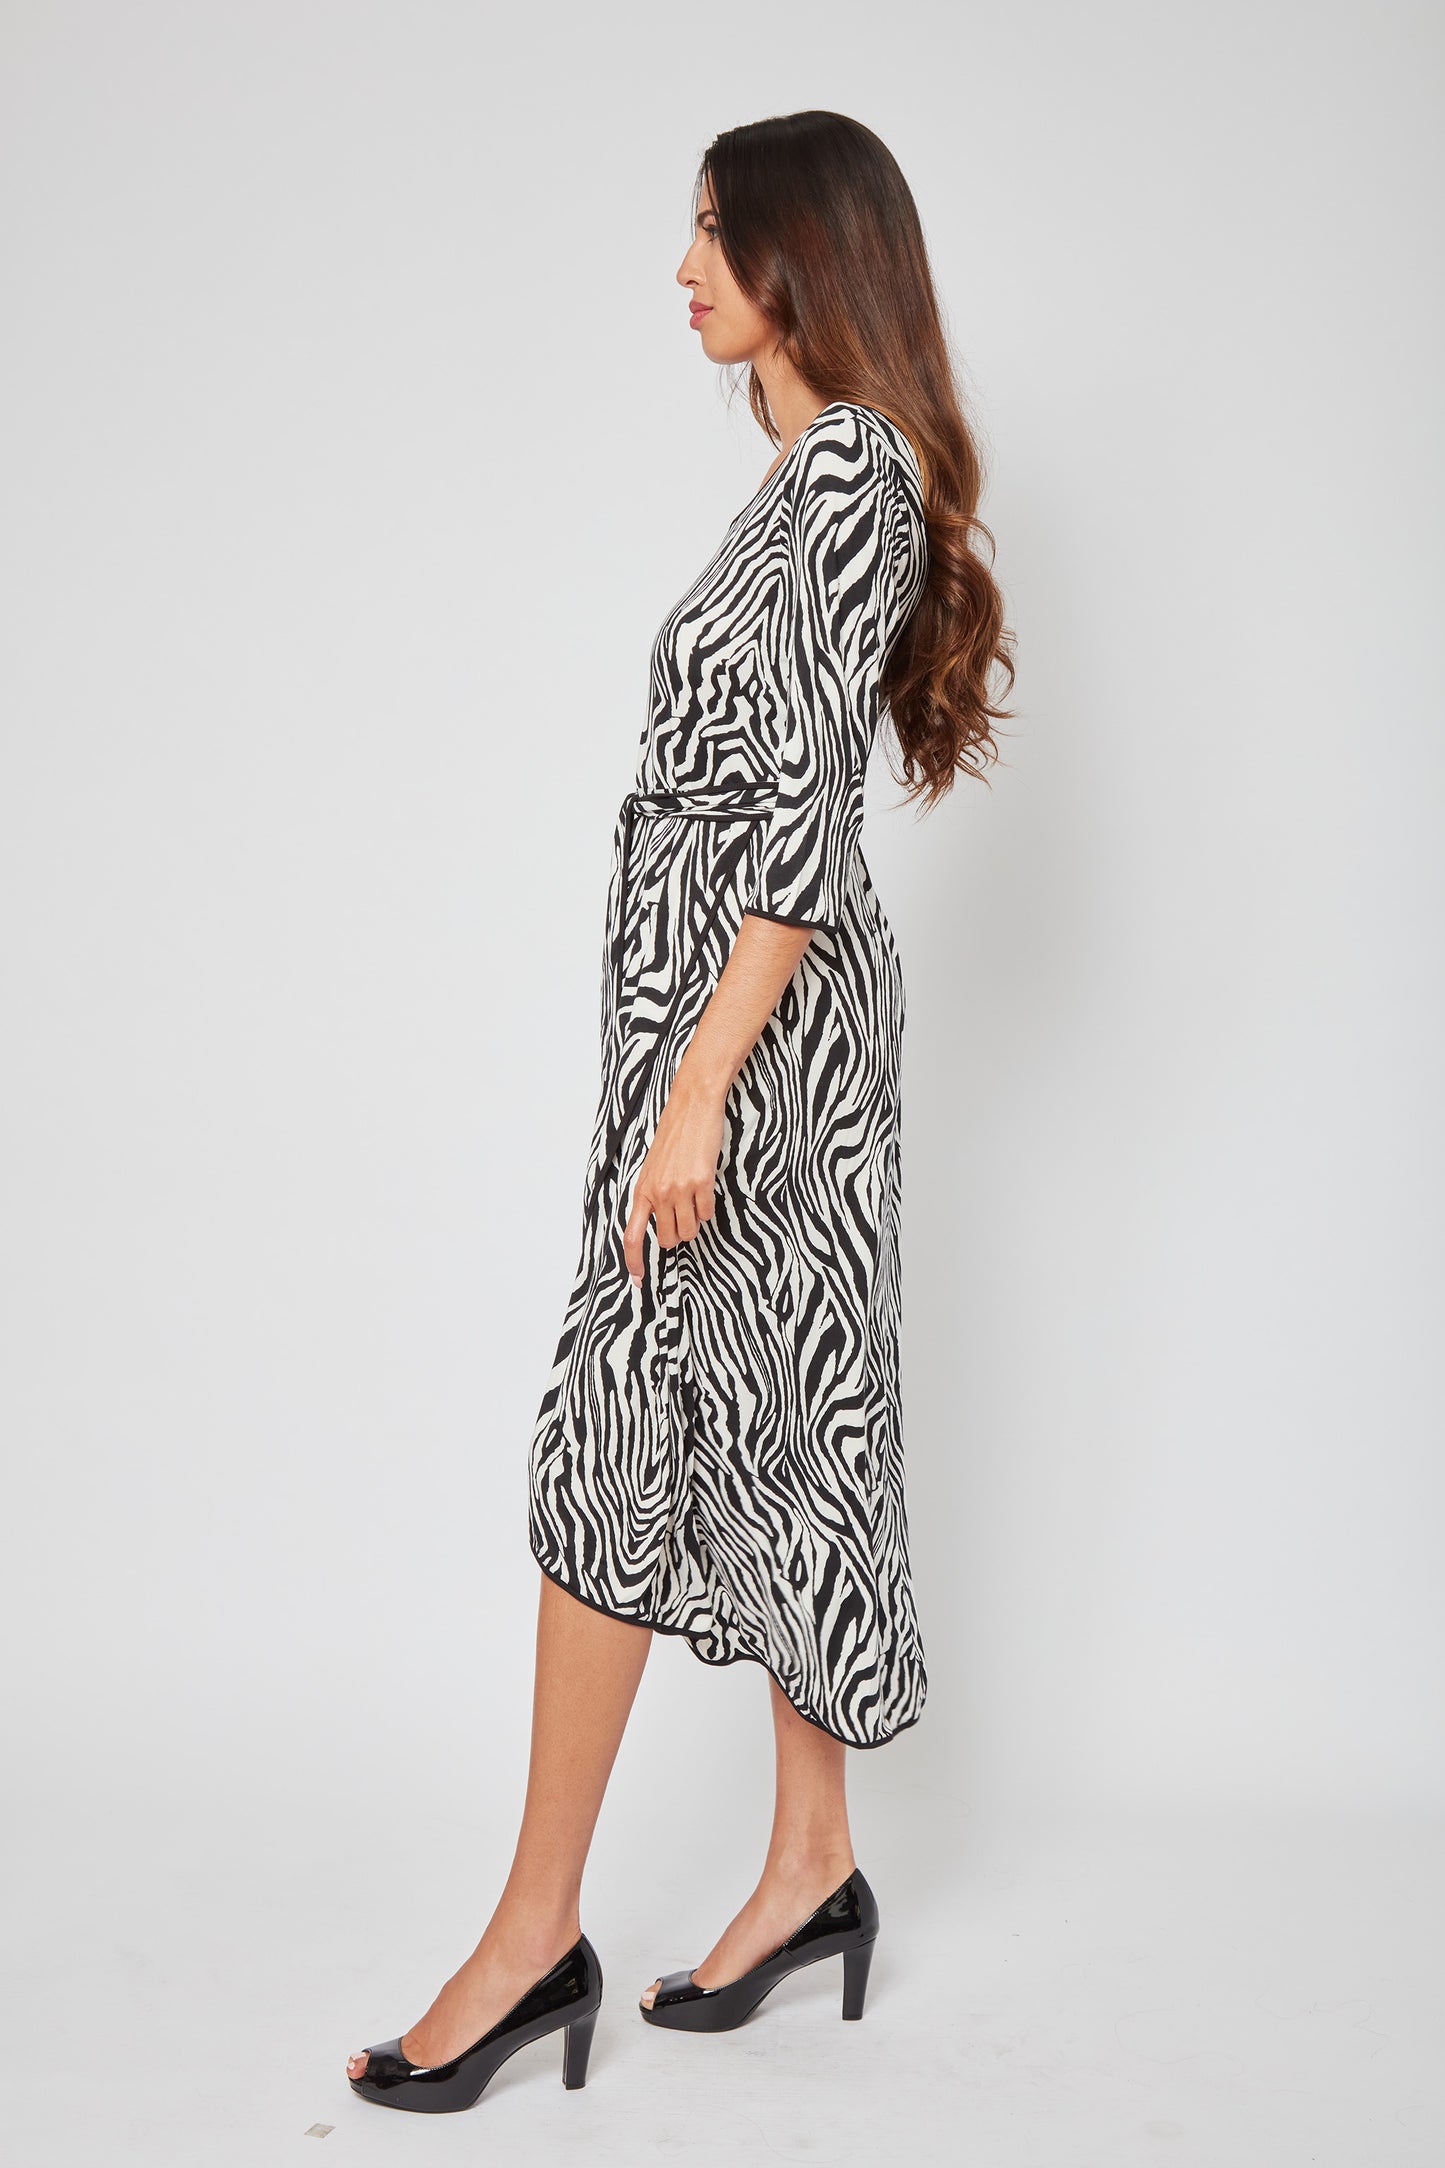 Classic and Chic Zebra Printed Dress